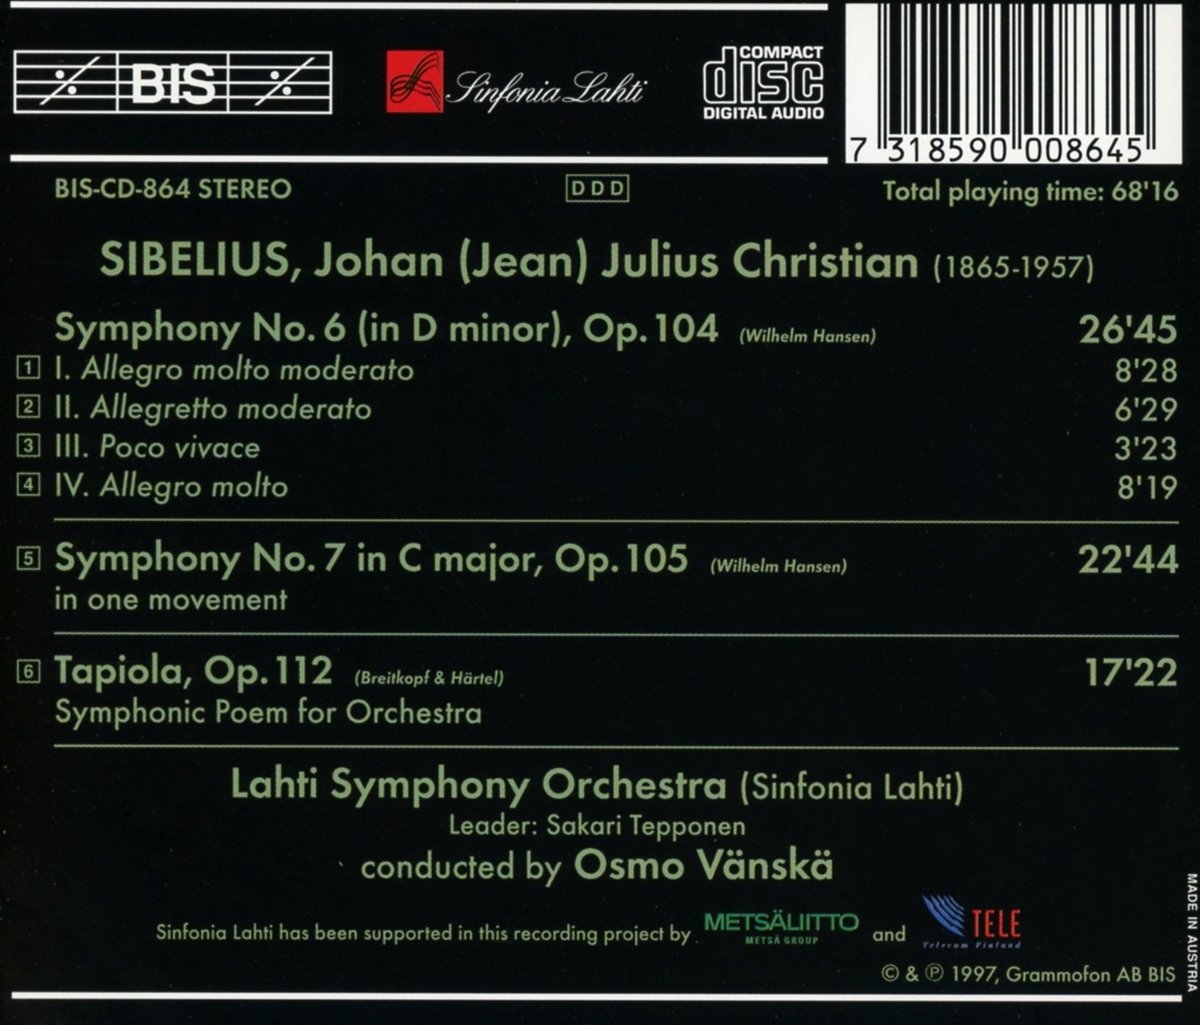 Osmo Vanska 시벨리우스: 교향곡 6, 7번, 타피올라 (Sibelius: Symphony Op. 104, 105, Tapiola)